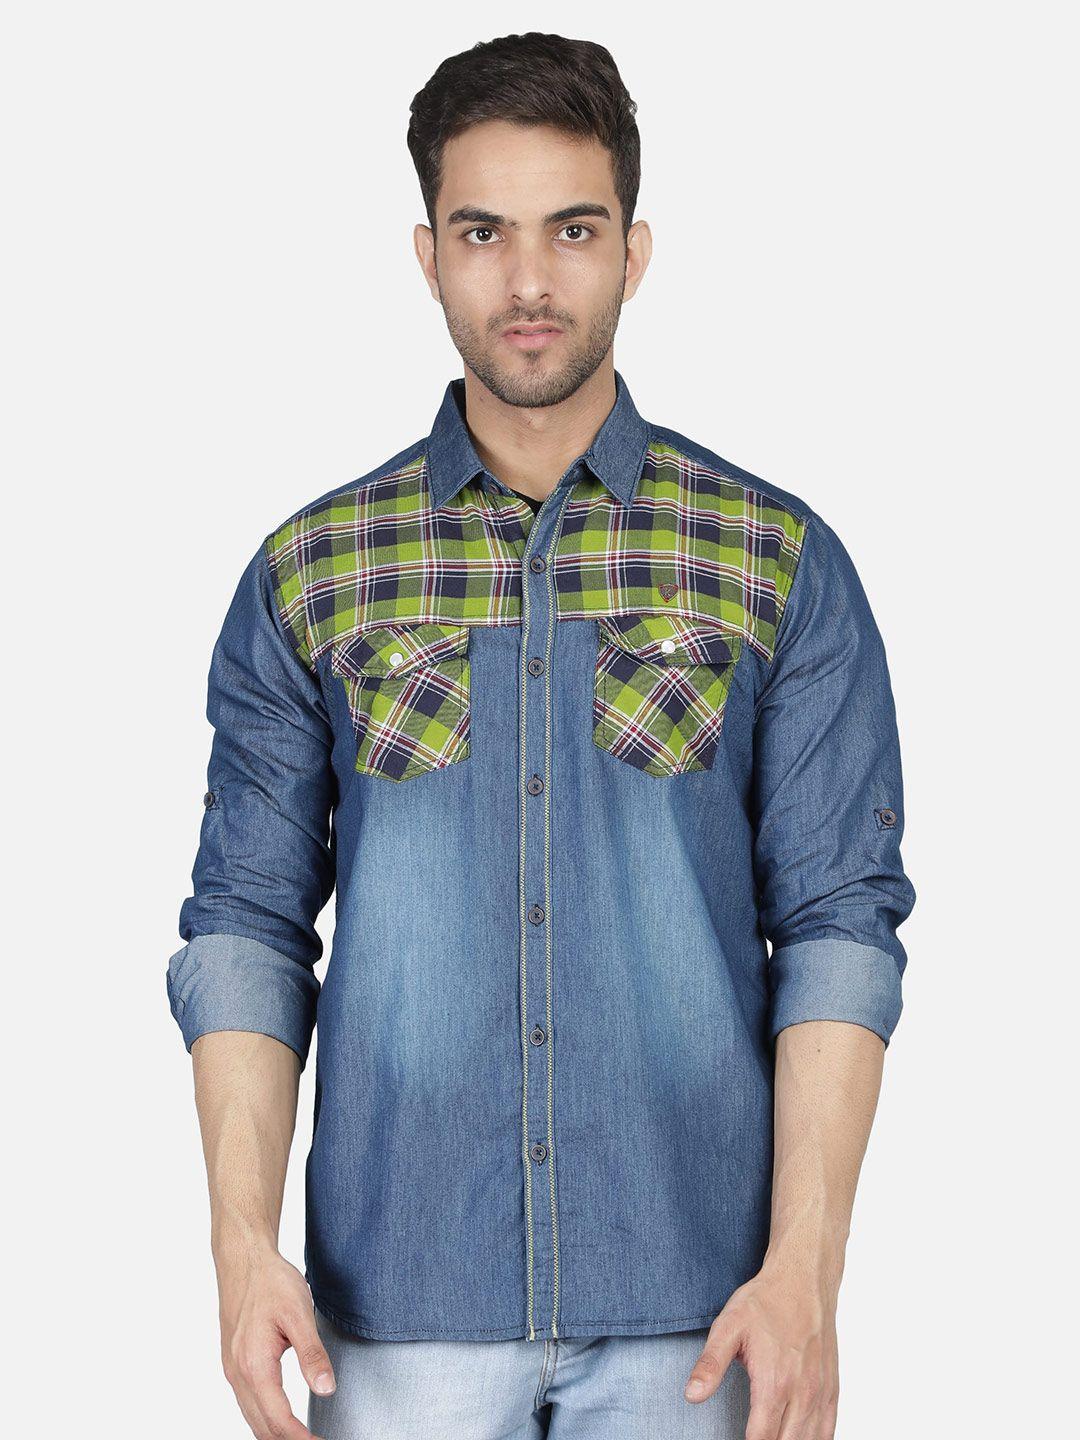 kuons-avenue-men-checked-cotton-smart-slim-fit-casual-shirt